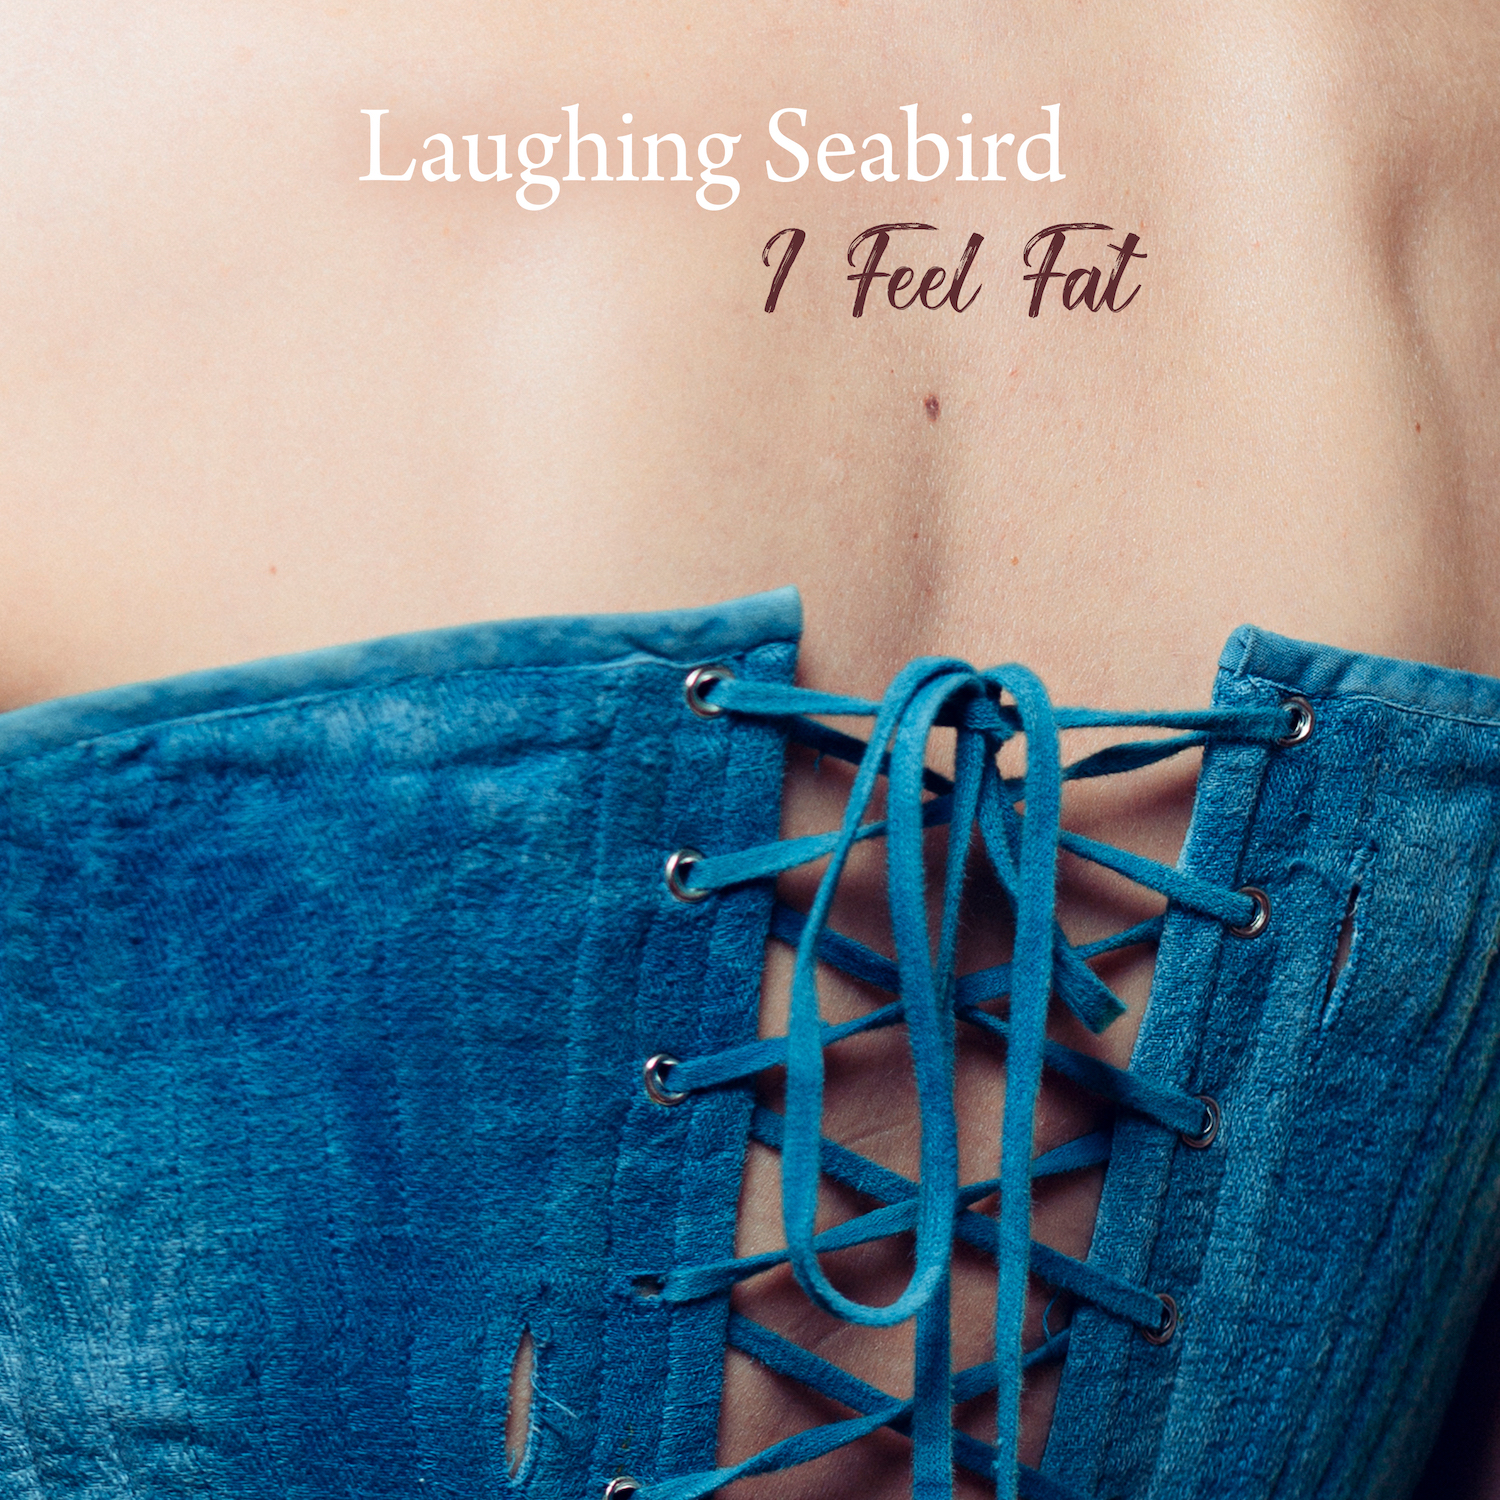 Laughing Seabird - "I Feel Fat" (Music Video)